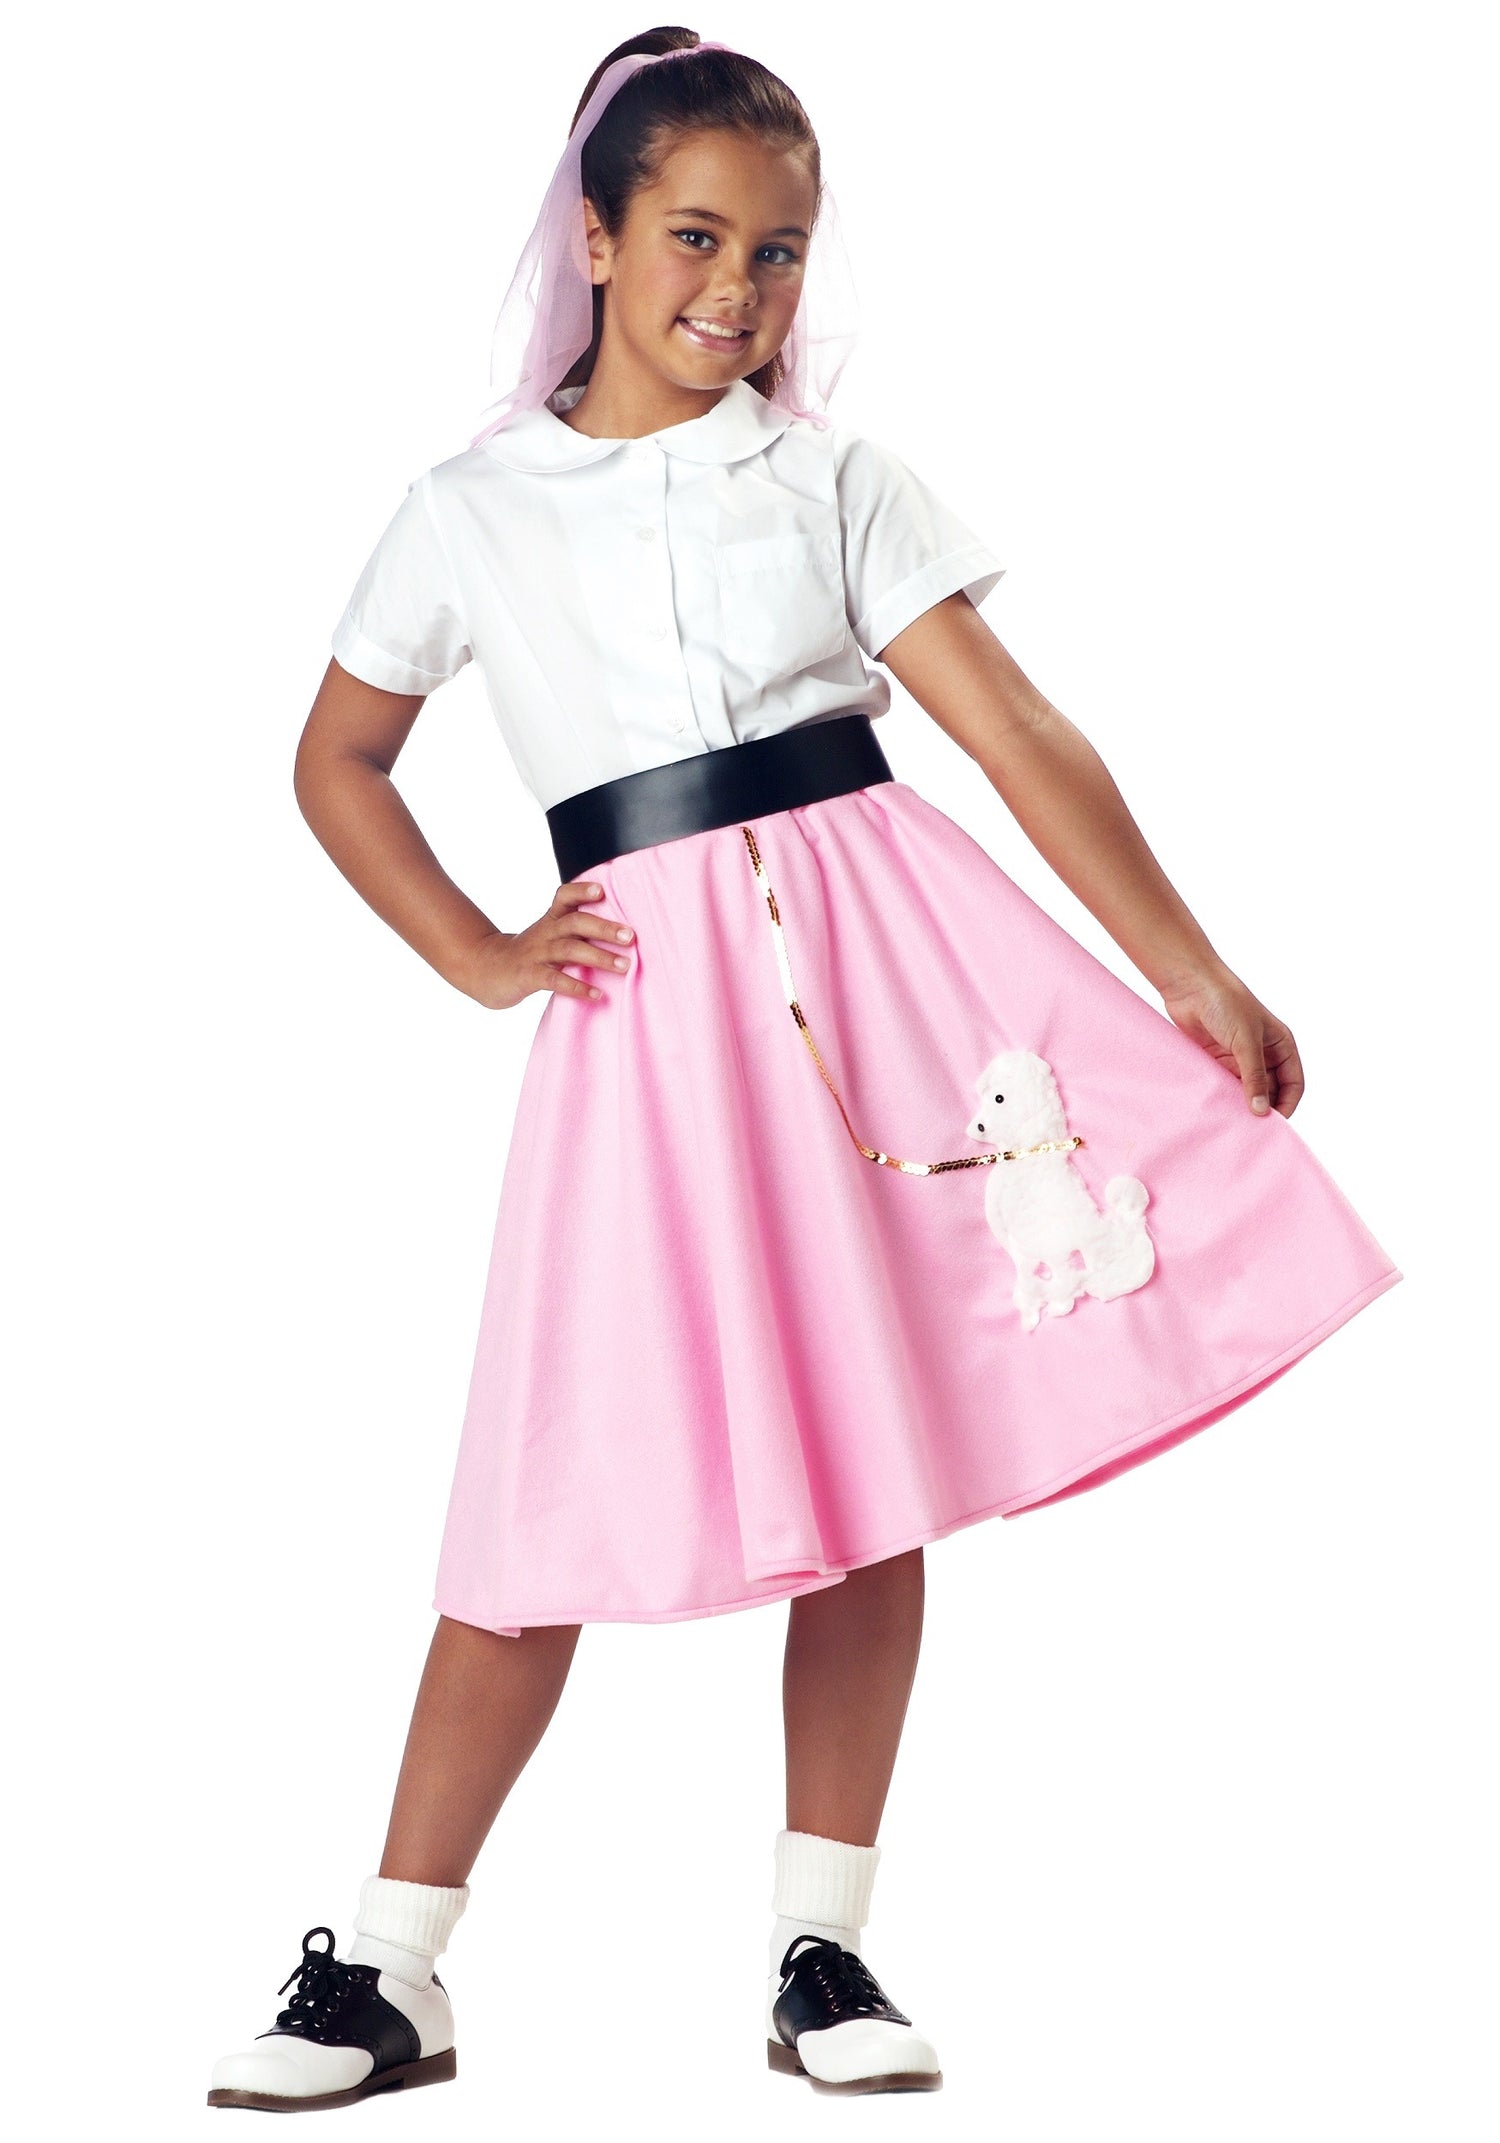 Costume Hire - Senior Skirts